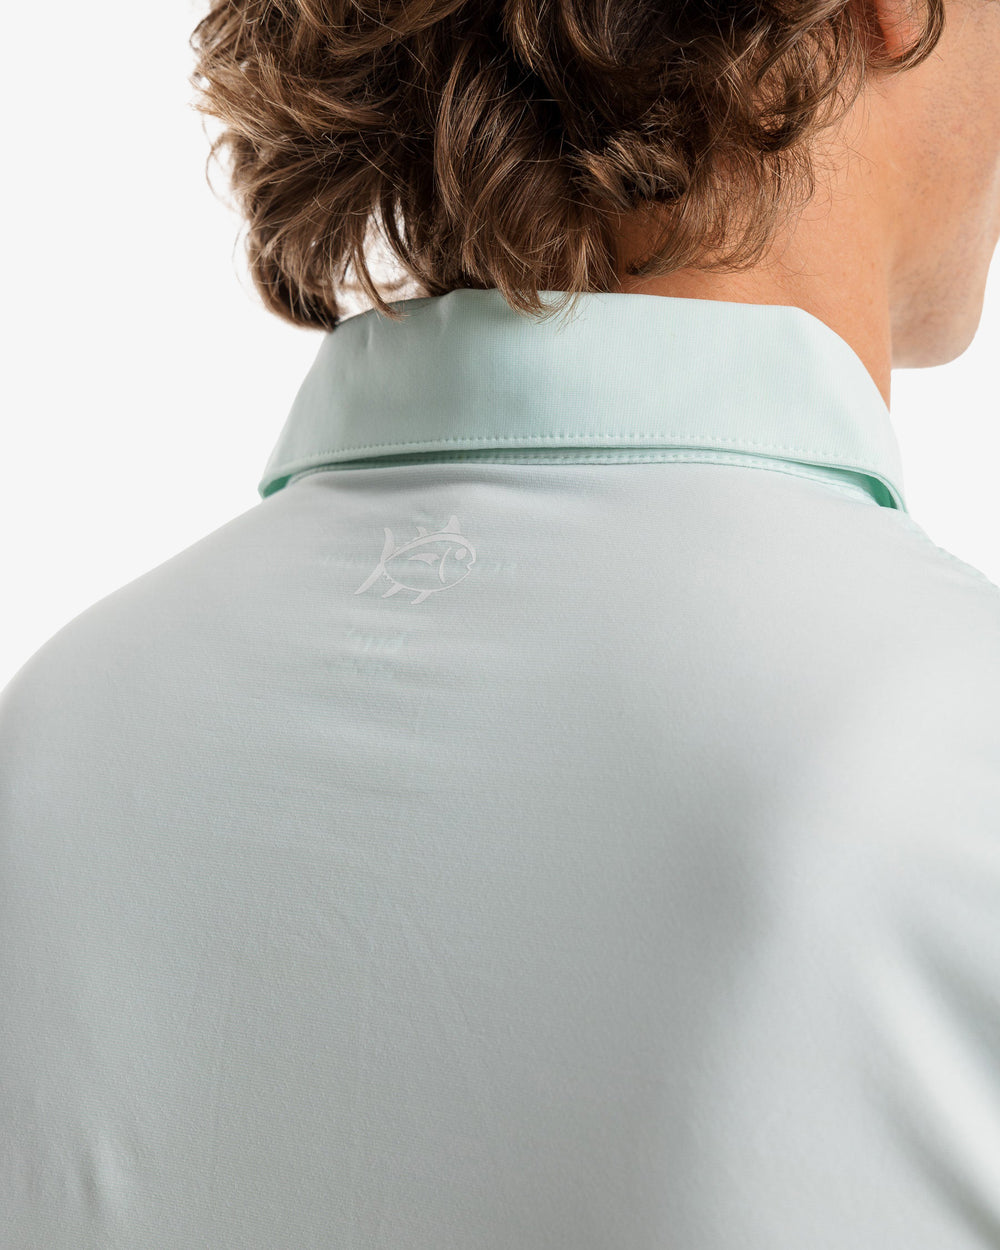 The model yoke view of the Men's Sawgrass Stripe brrr°®-eeze Performance Polo Shirt by Southern Tide - Mist Green